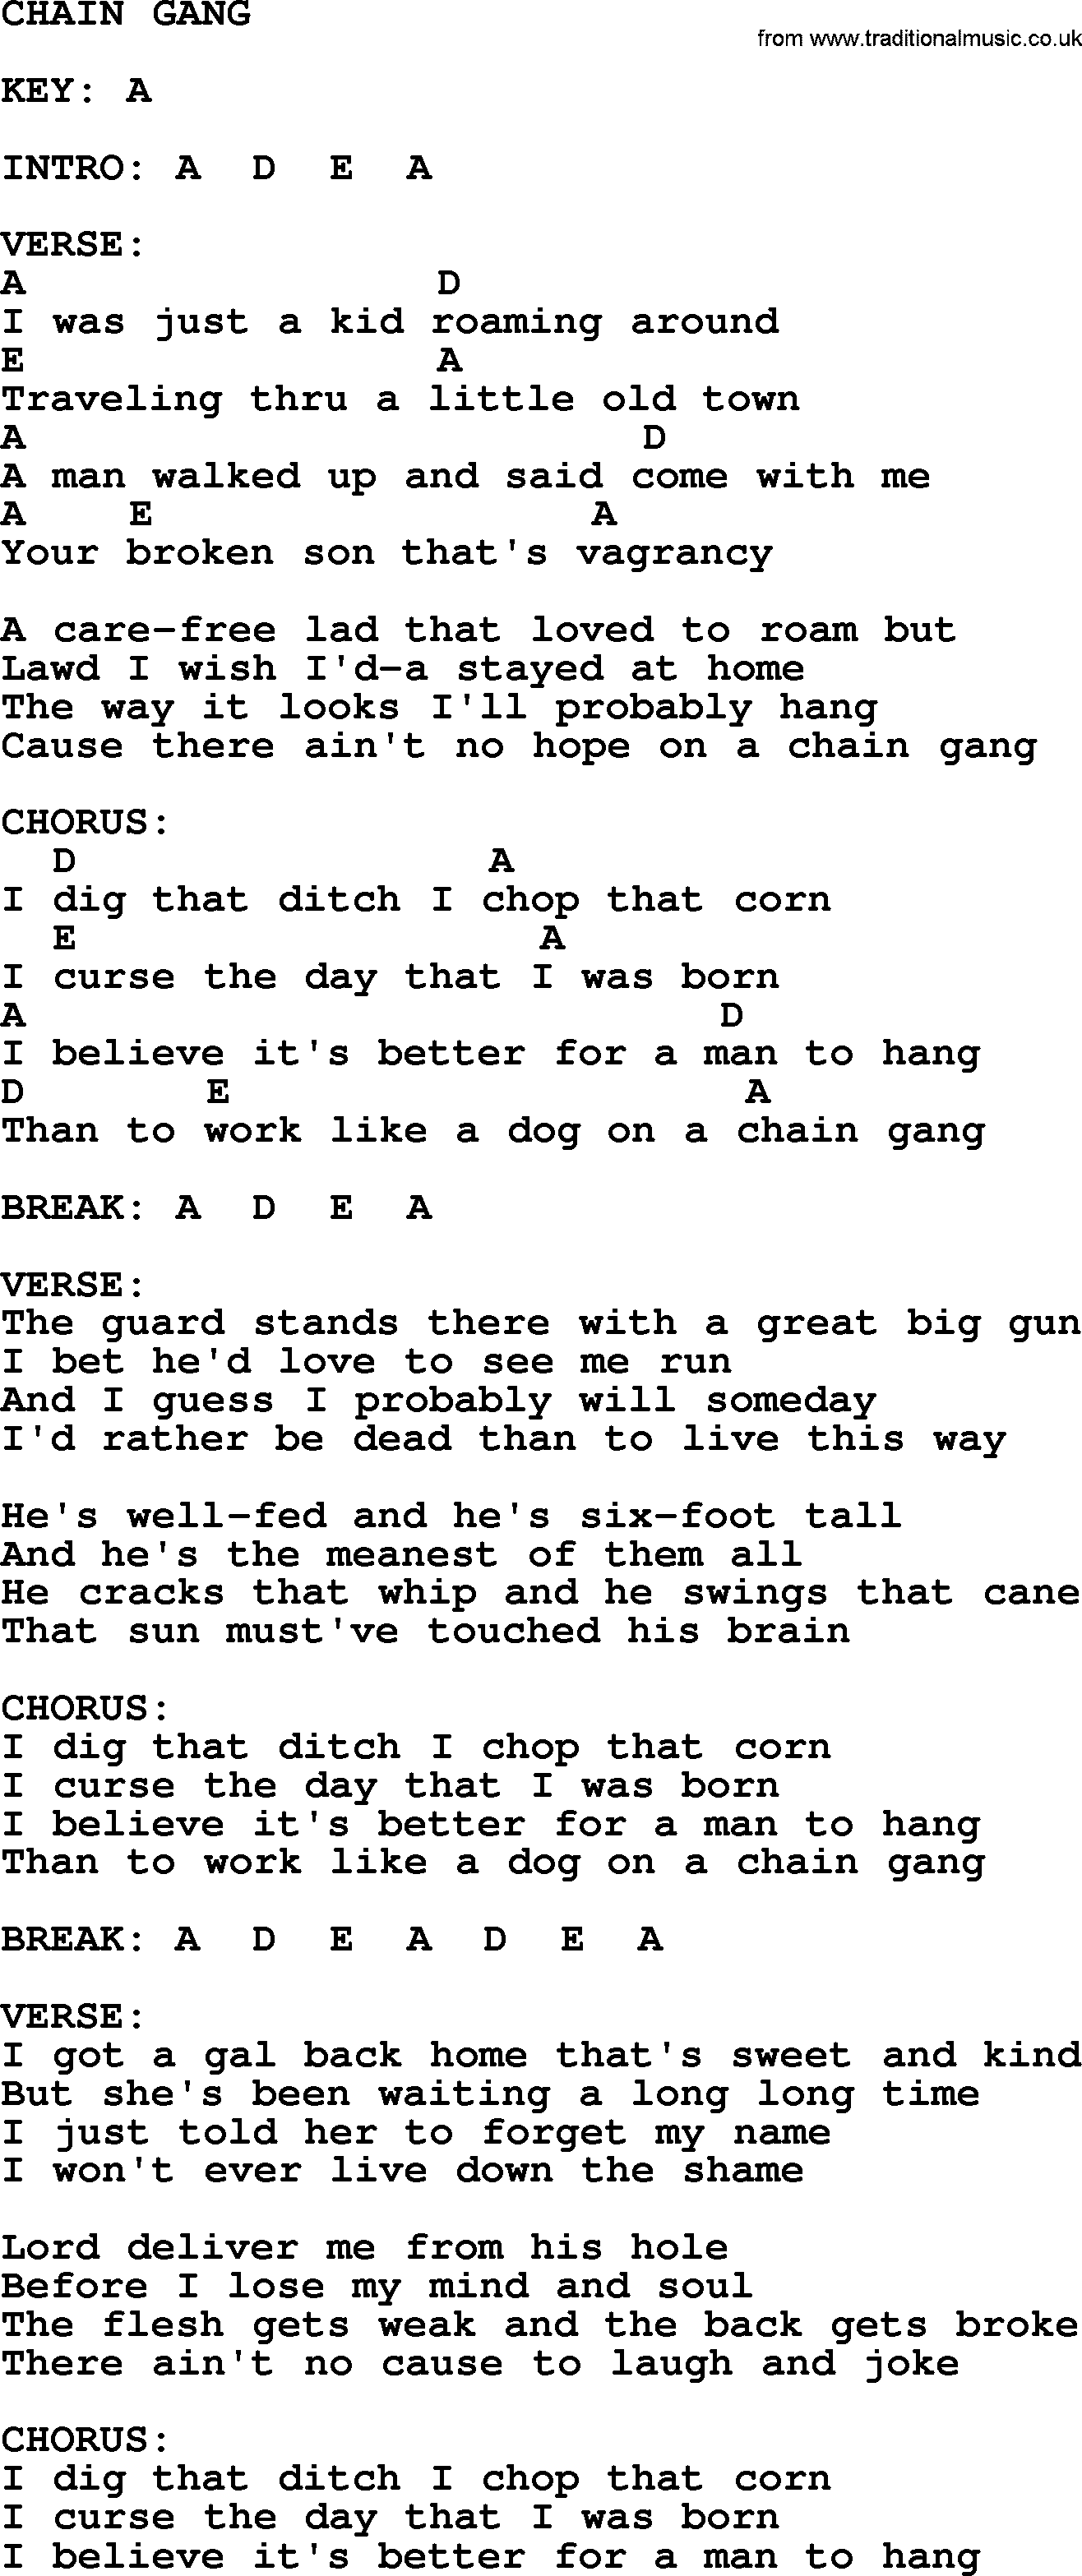 Johnny Cash song Chain Gang, lyrics and chords